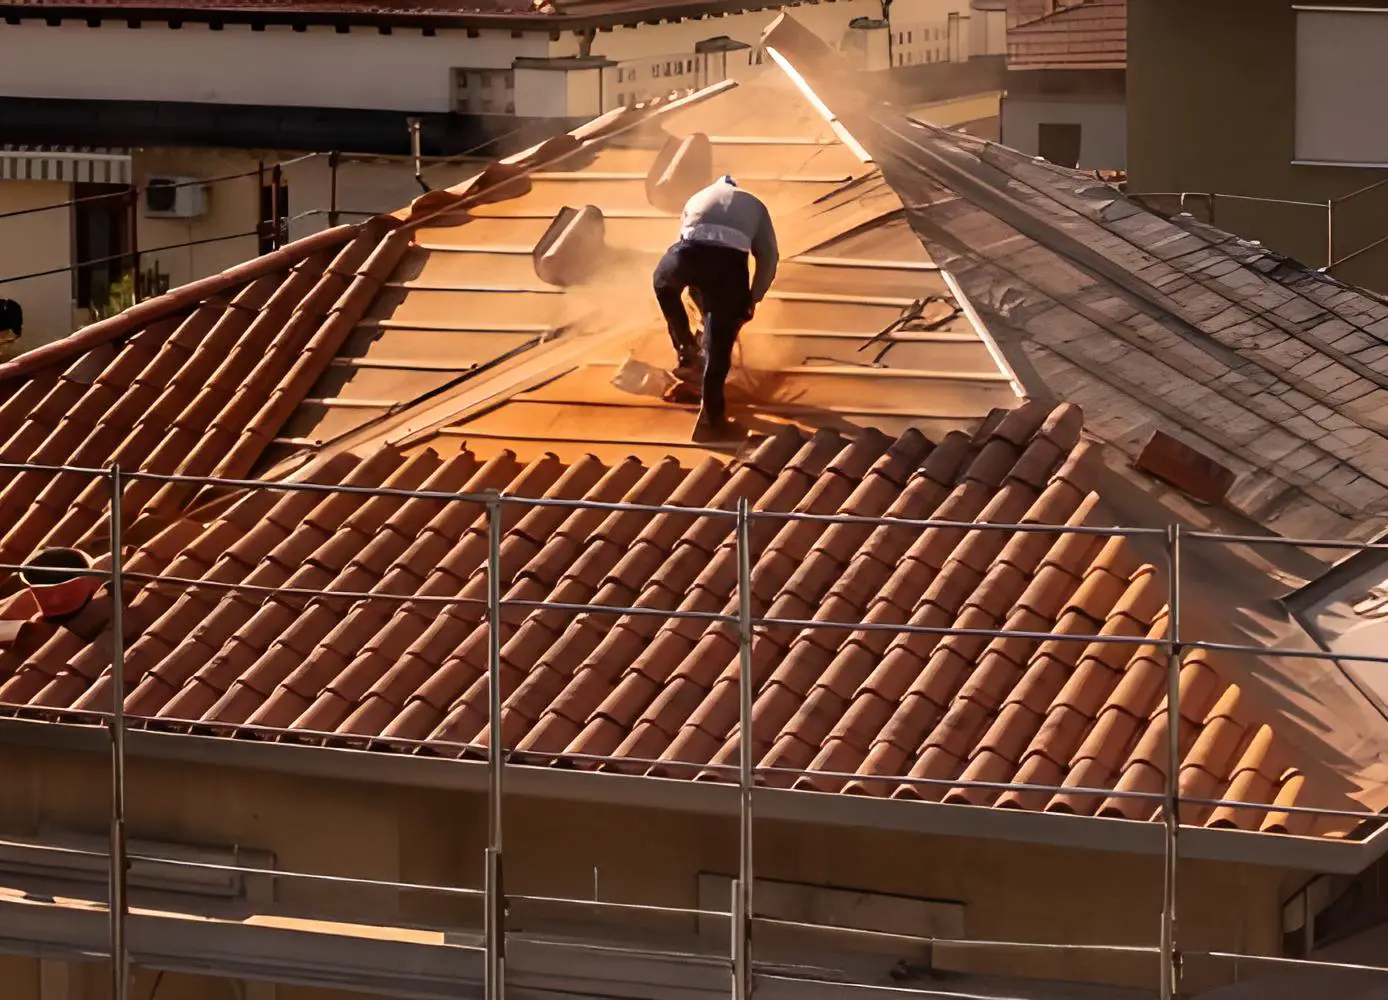 Terracotta roof